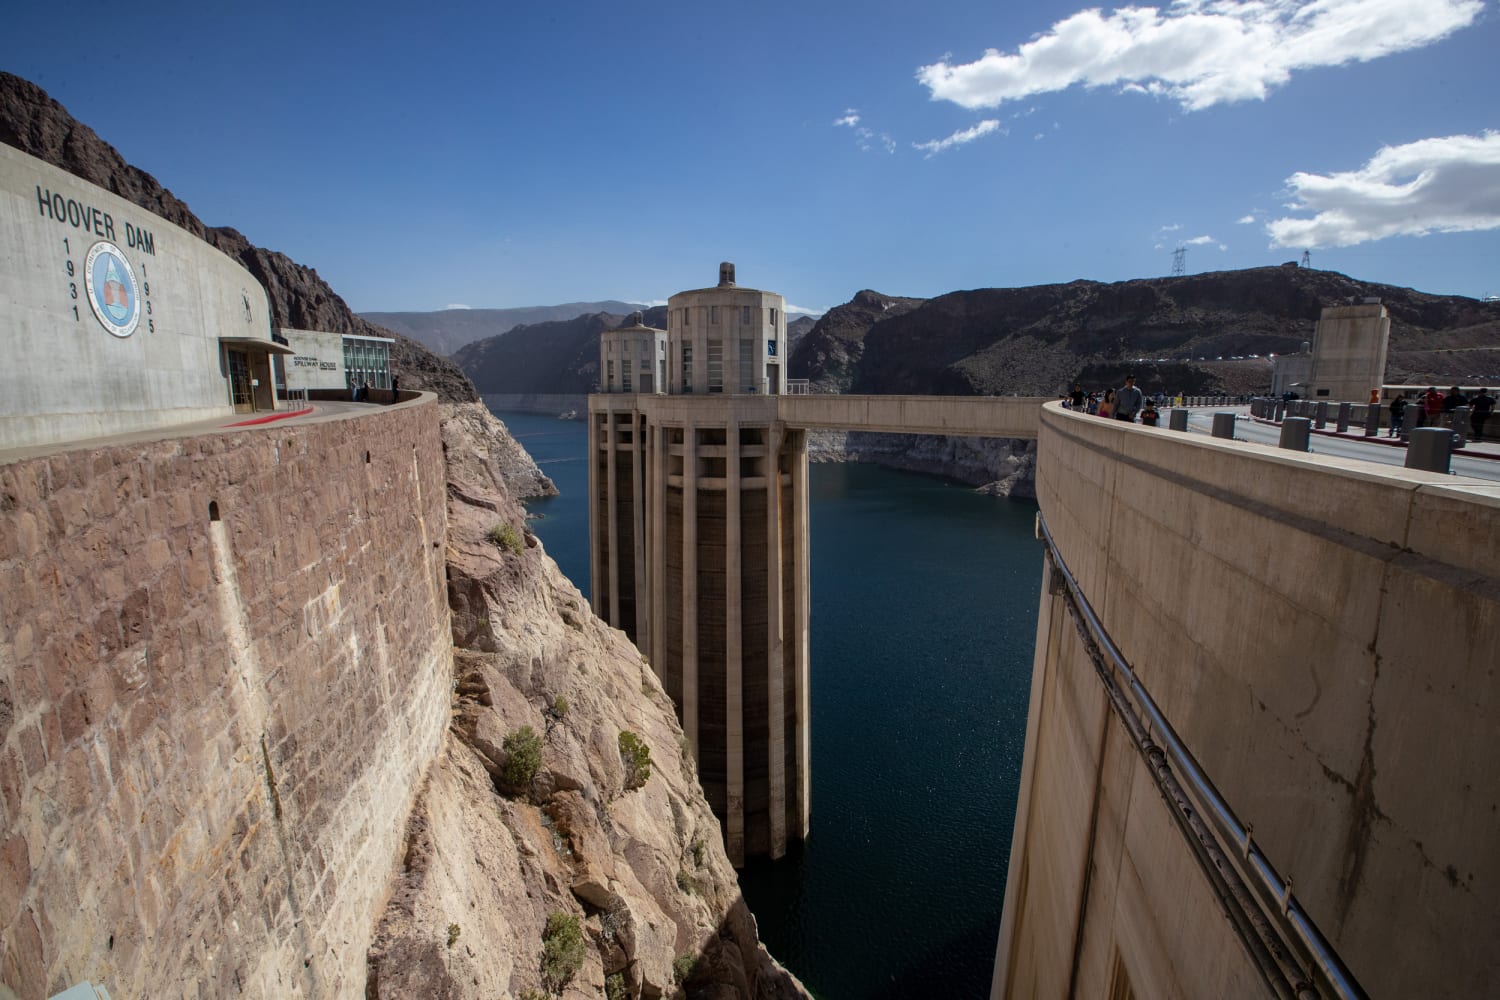 Colorado River Basin has lost enough water to fill Lake Mead •